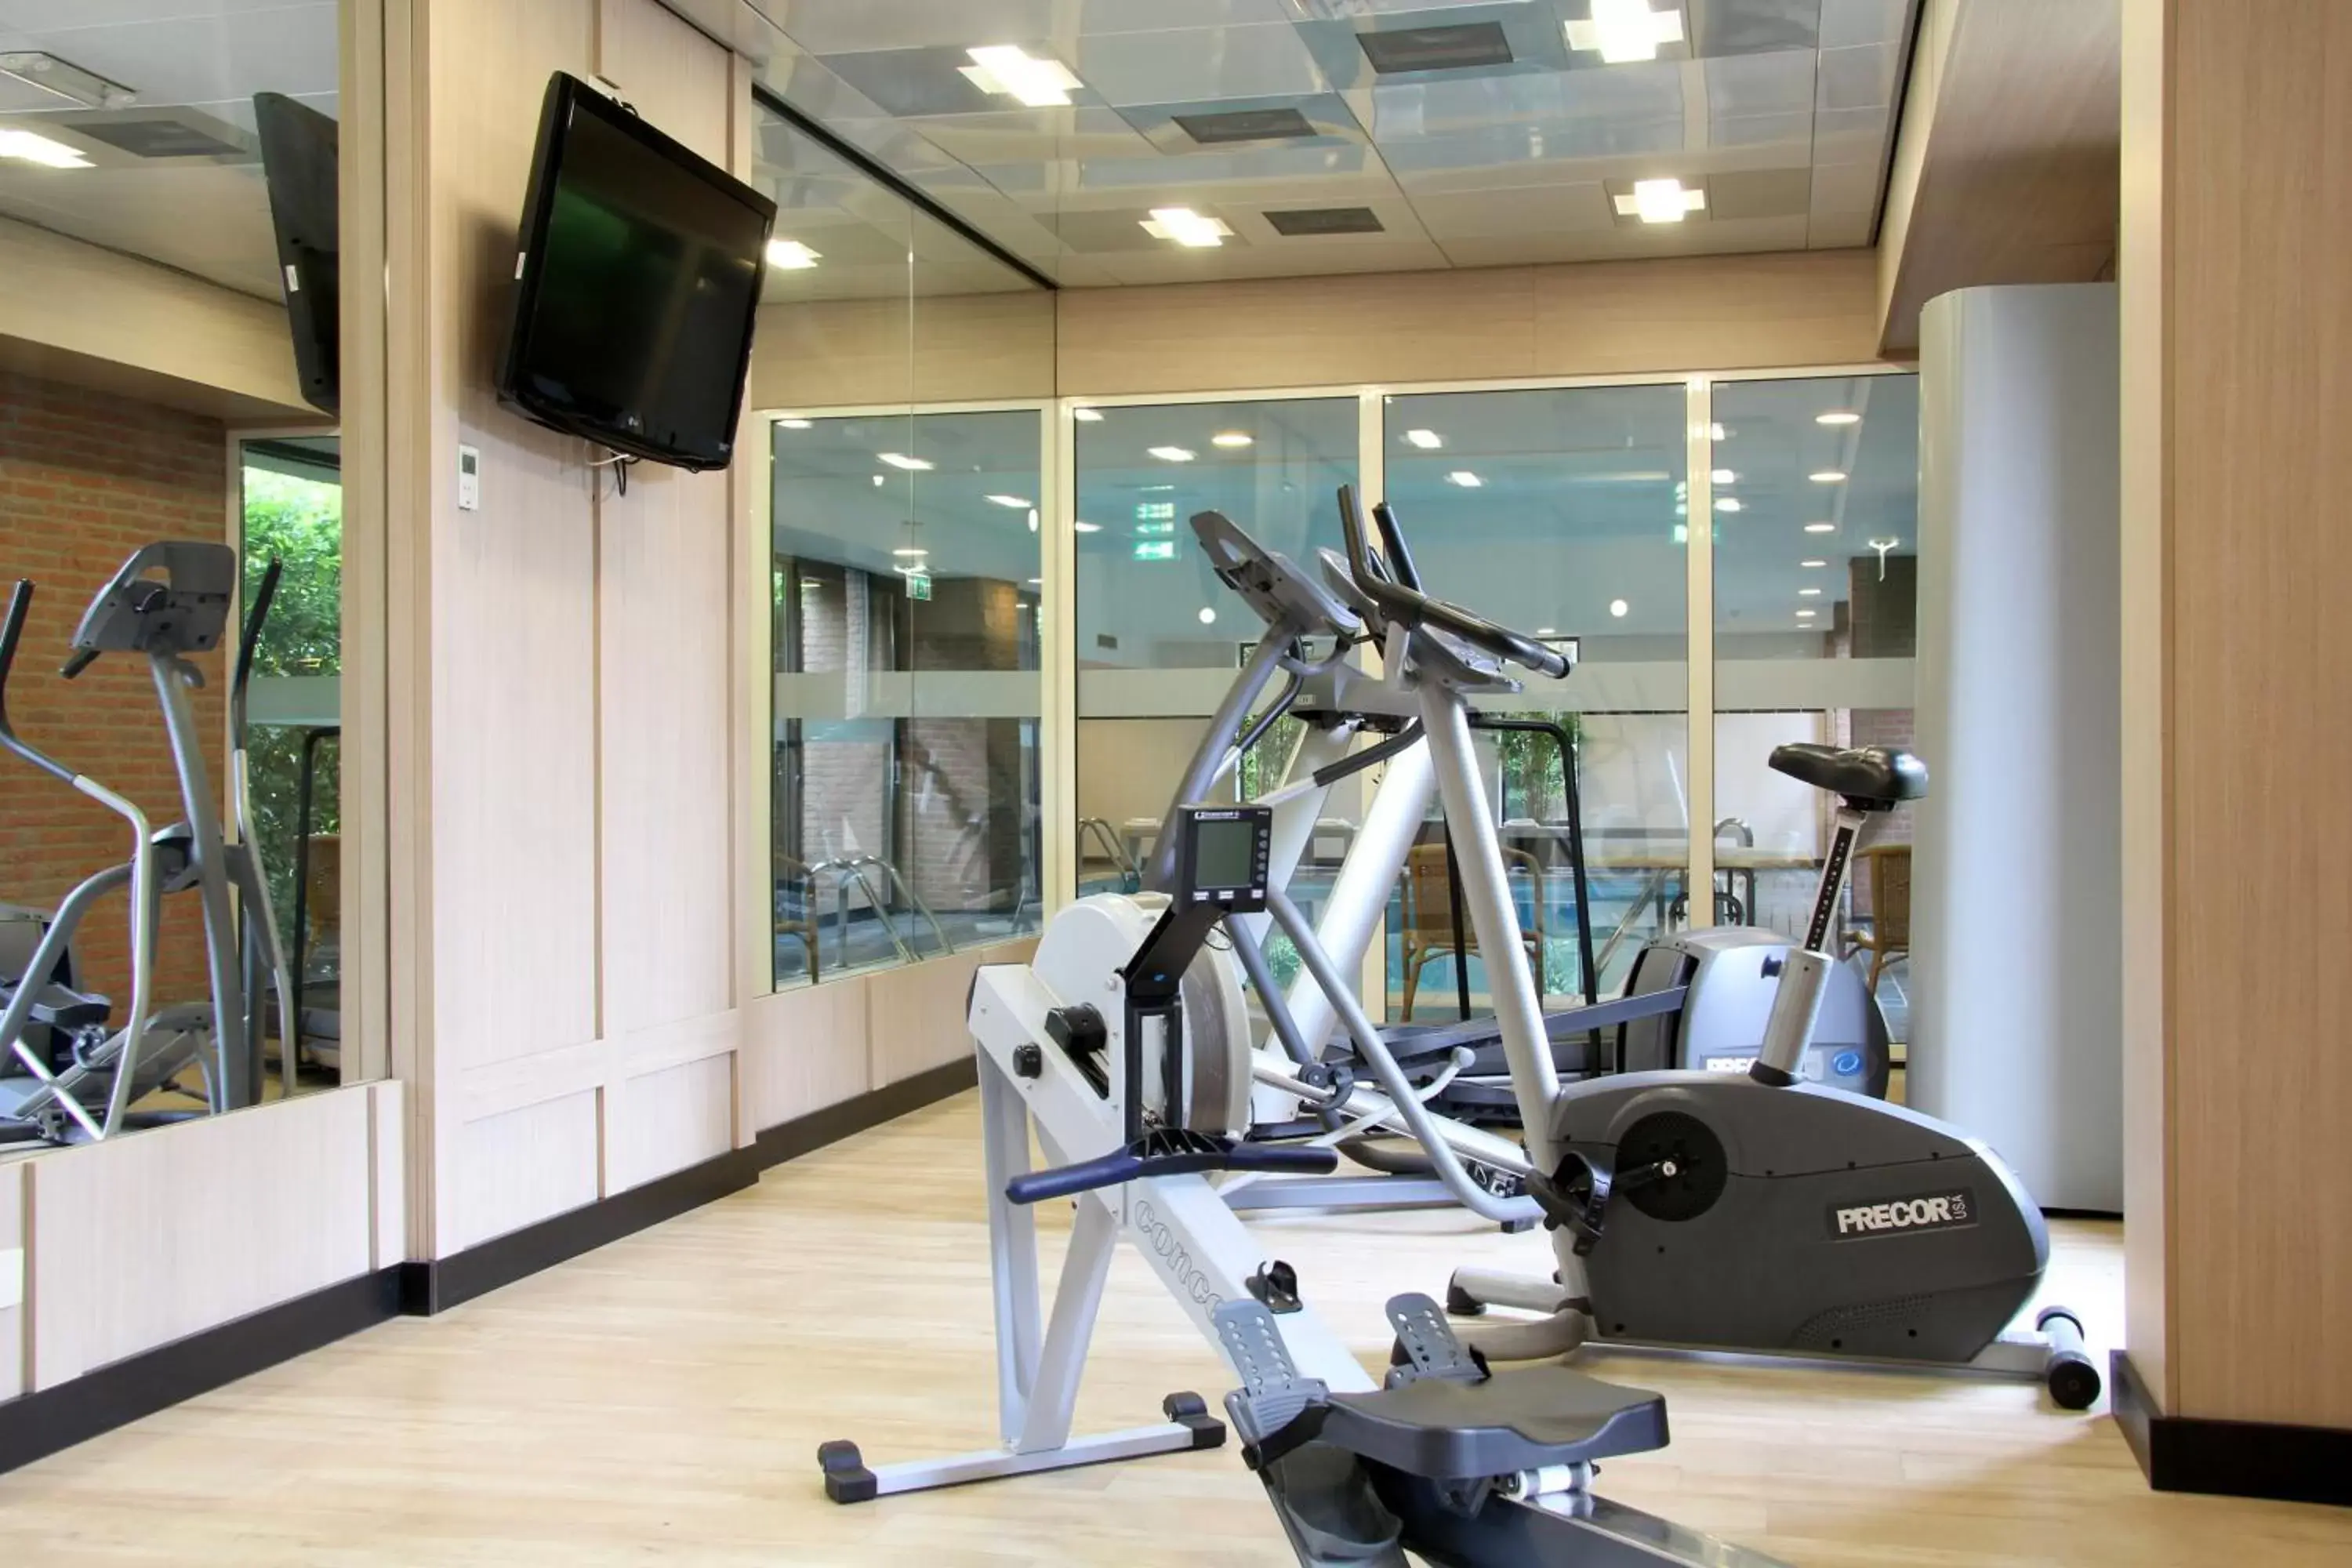 Fitness centre/facilities, Fitness Center/Facilities in Bastion Hotel Apeldoorn Het Loo